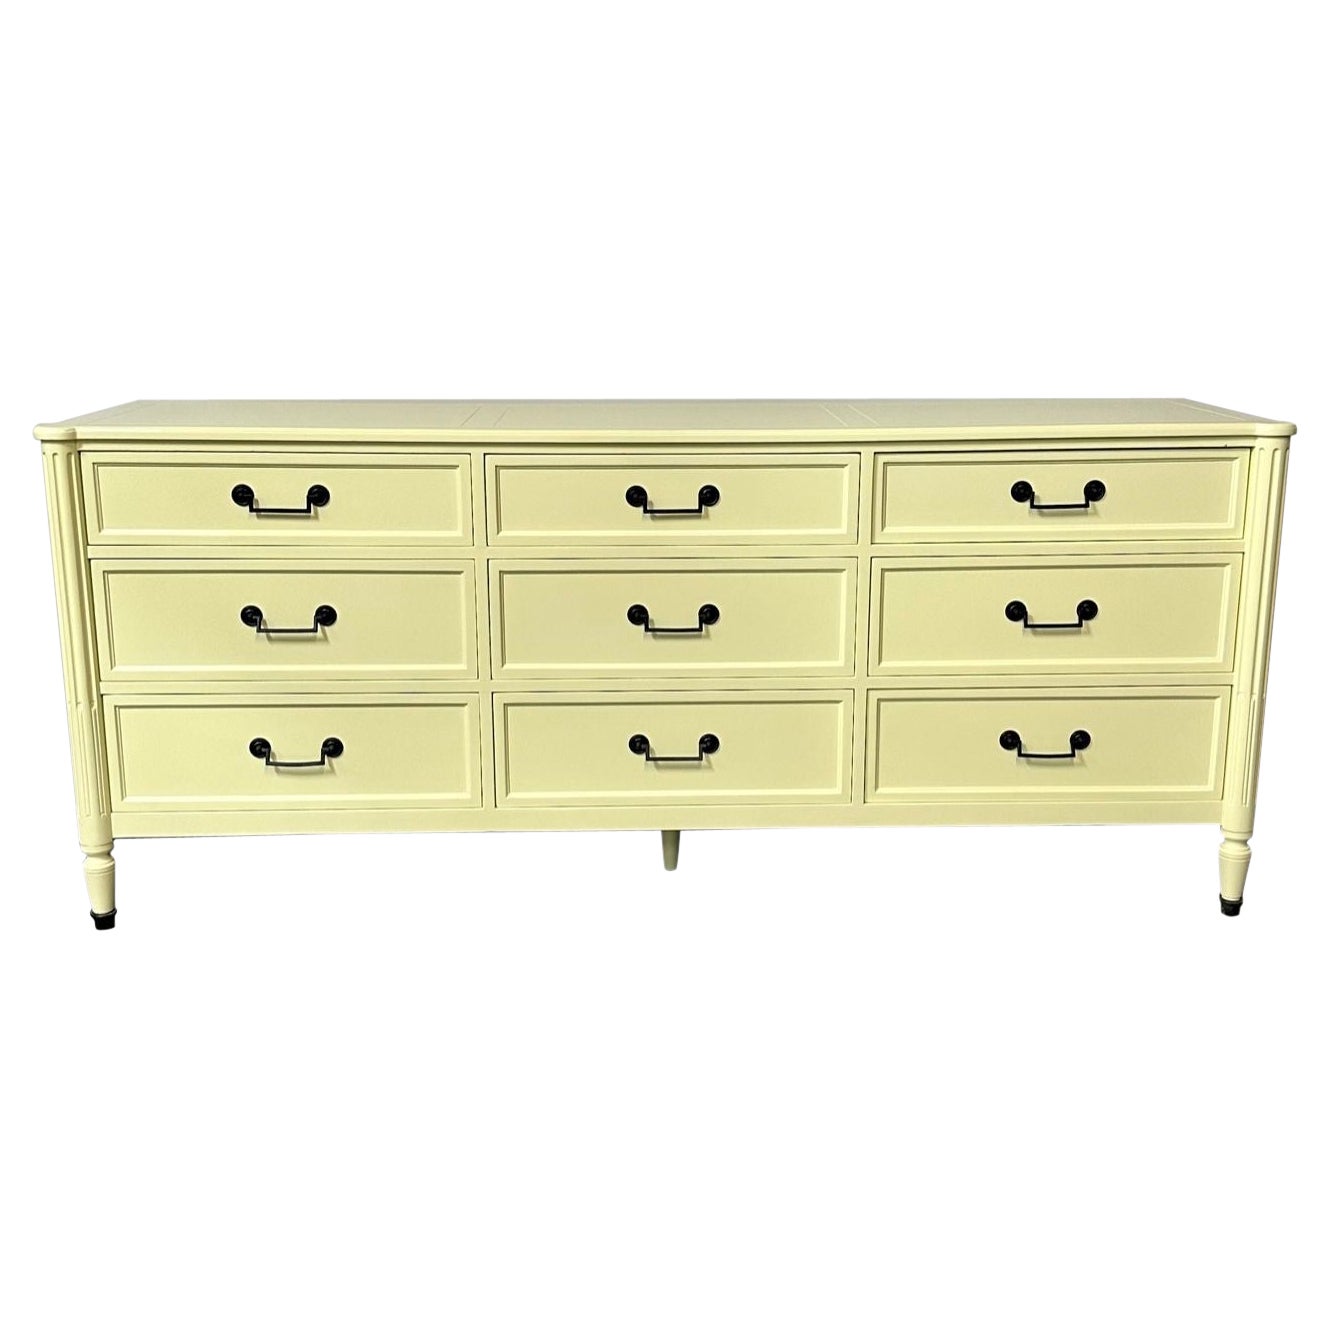 Celadon Green Dresser / Sideboard by Baker, Brass Handles, Refinished, Regency